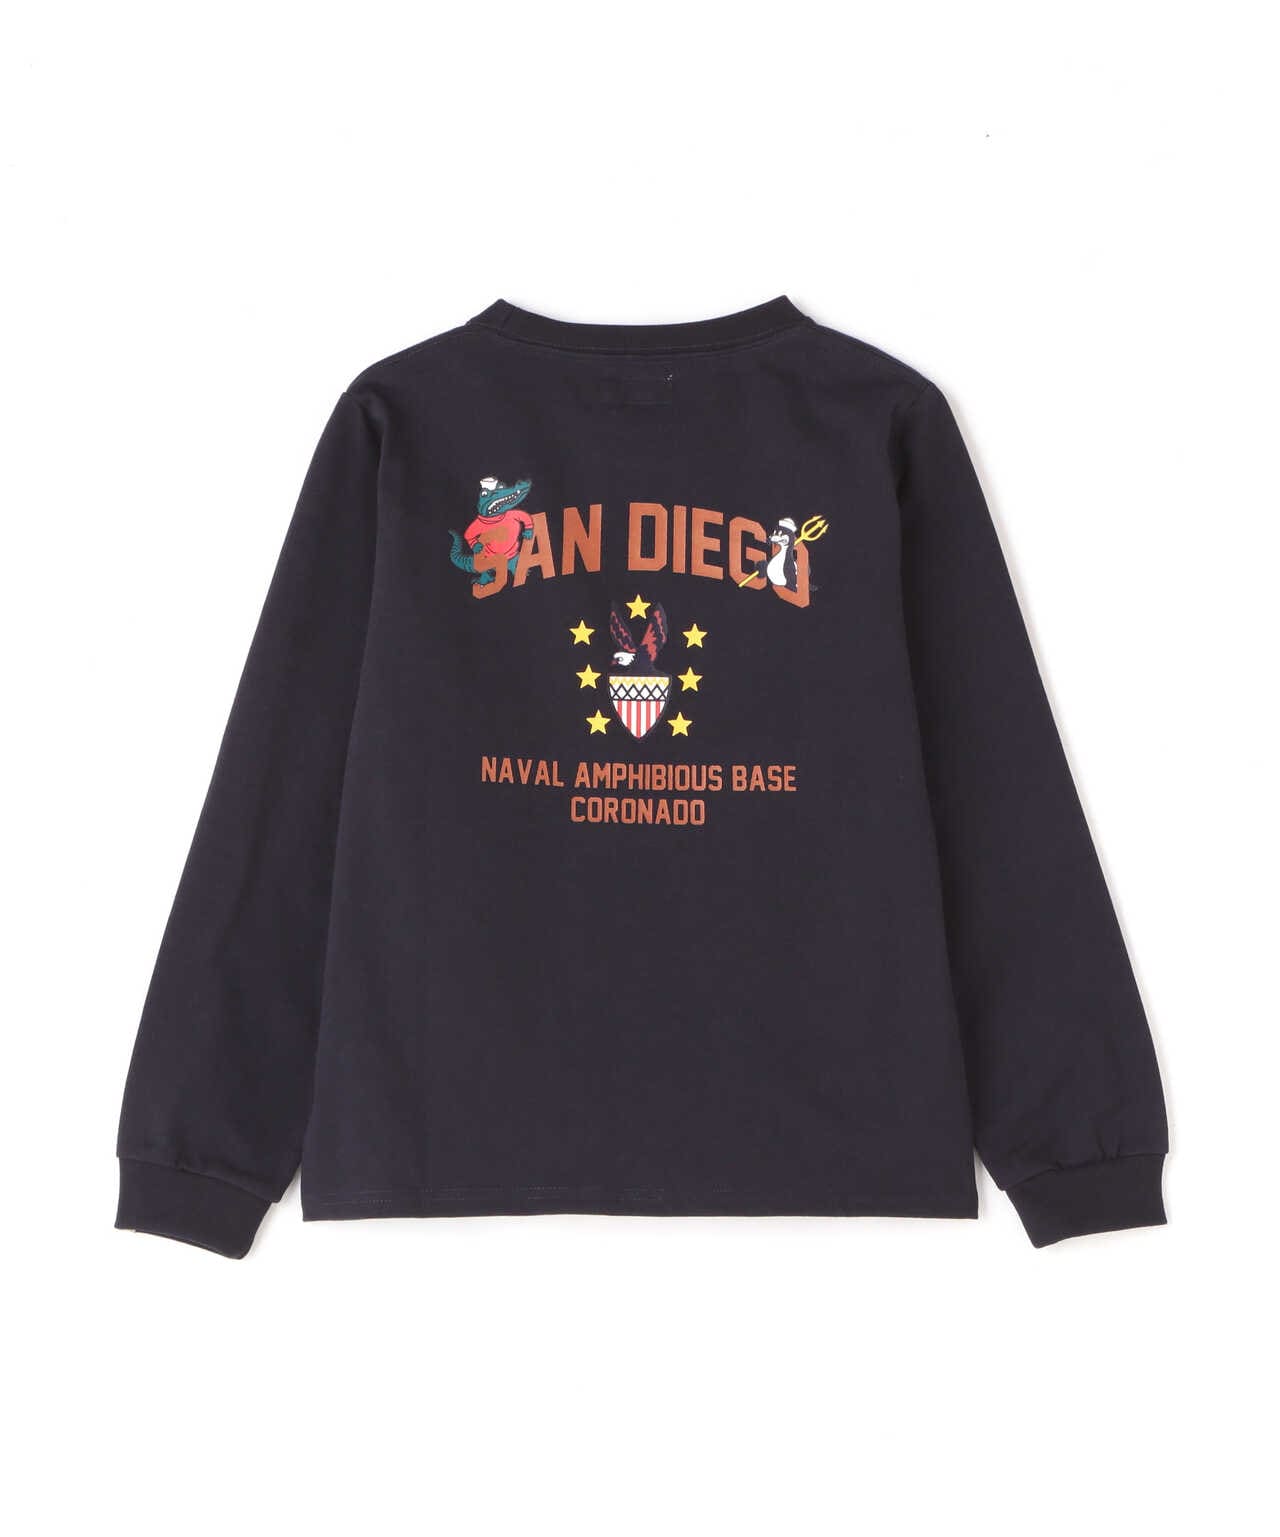 《KIDS》L/S SAN DIEGO POCEKT T-SHIRT/サンディエゴ ポケット Tシャツ/キッズ